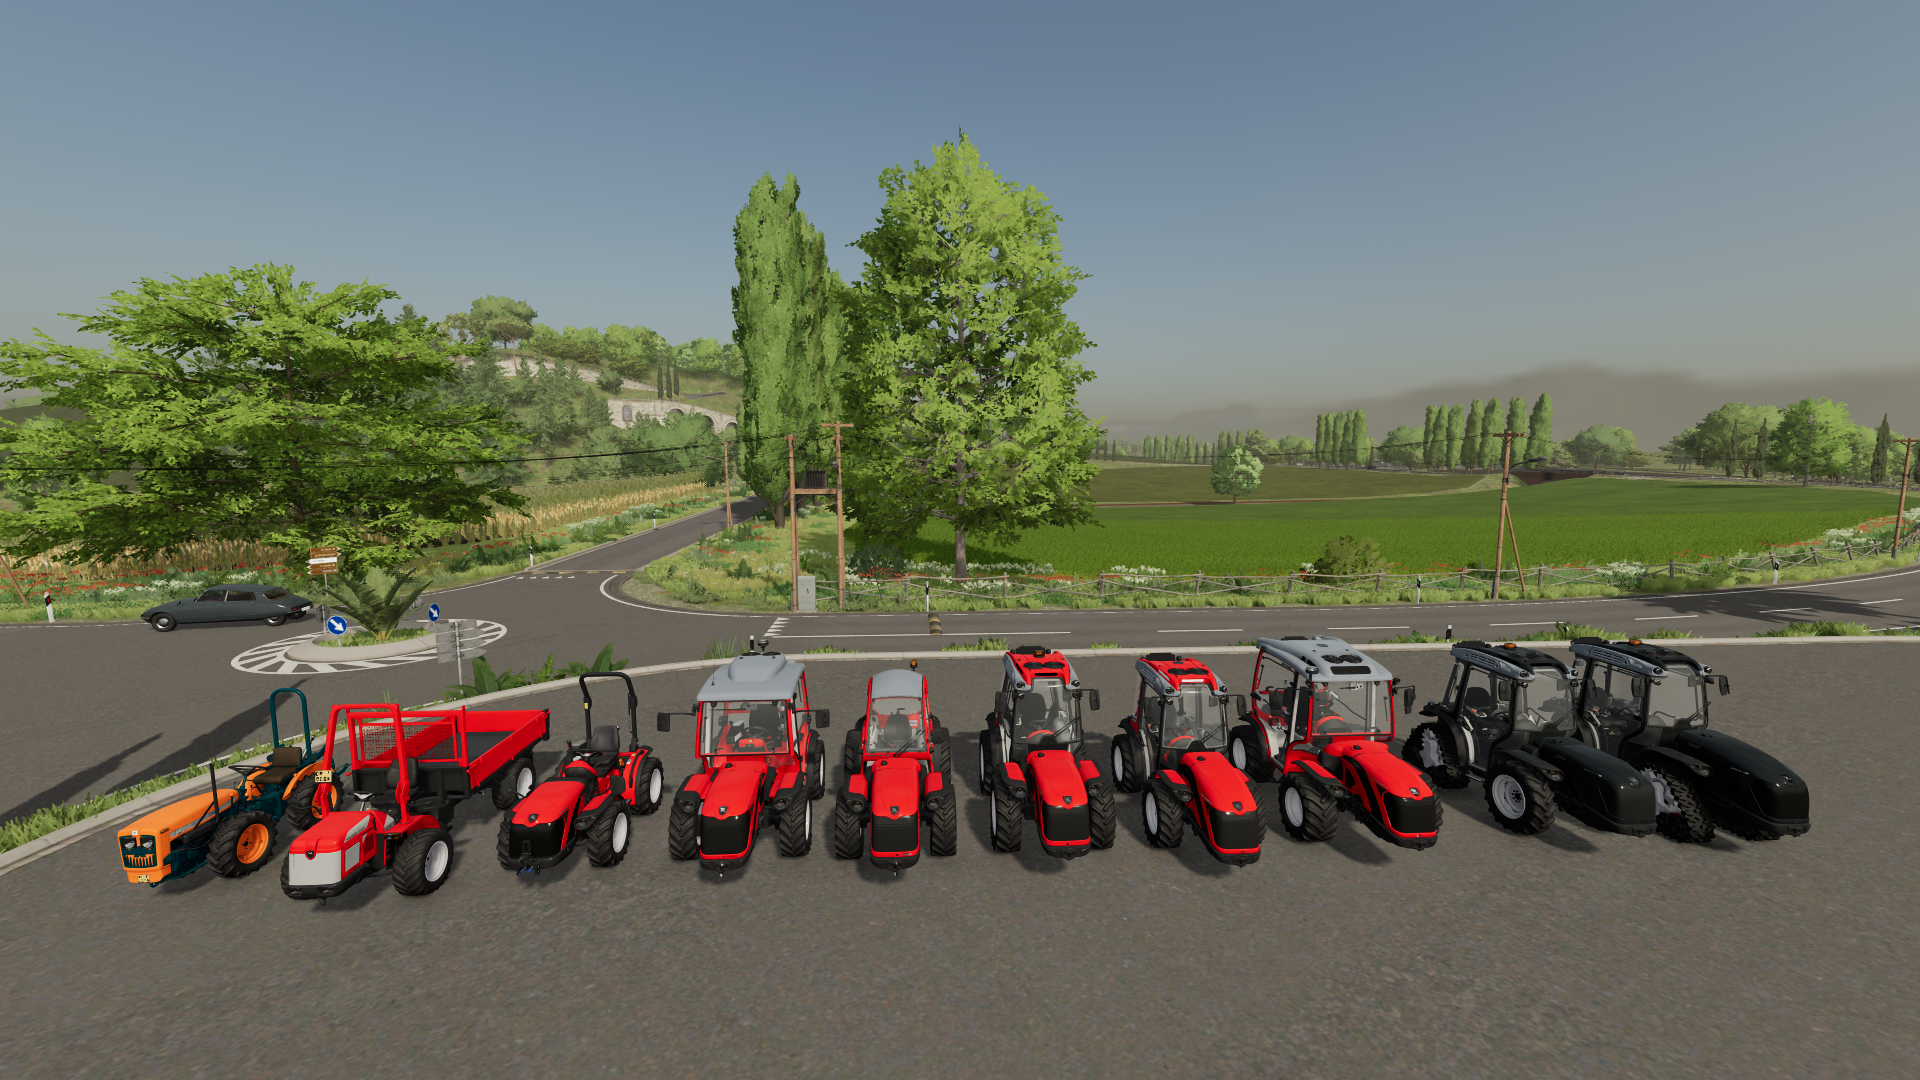 A screenshot of the Antonio Carraro line-up of tractors